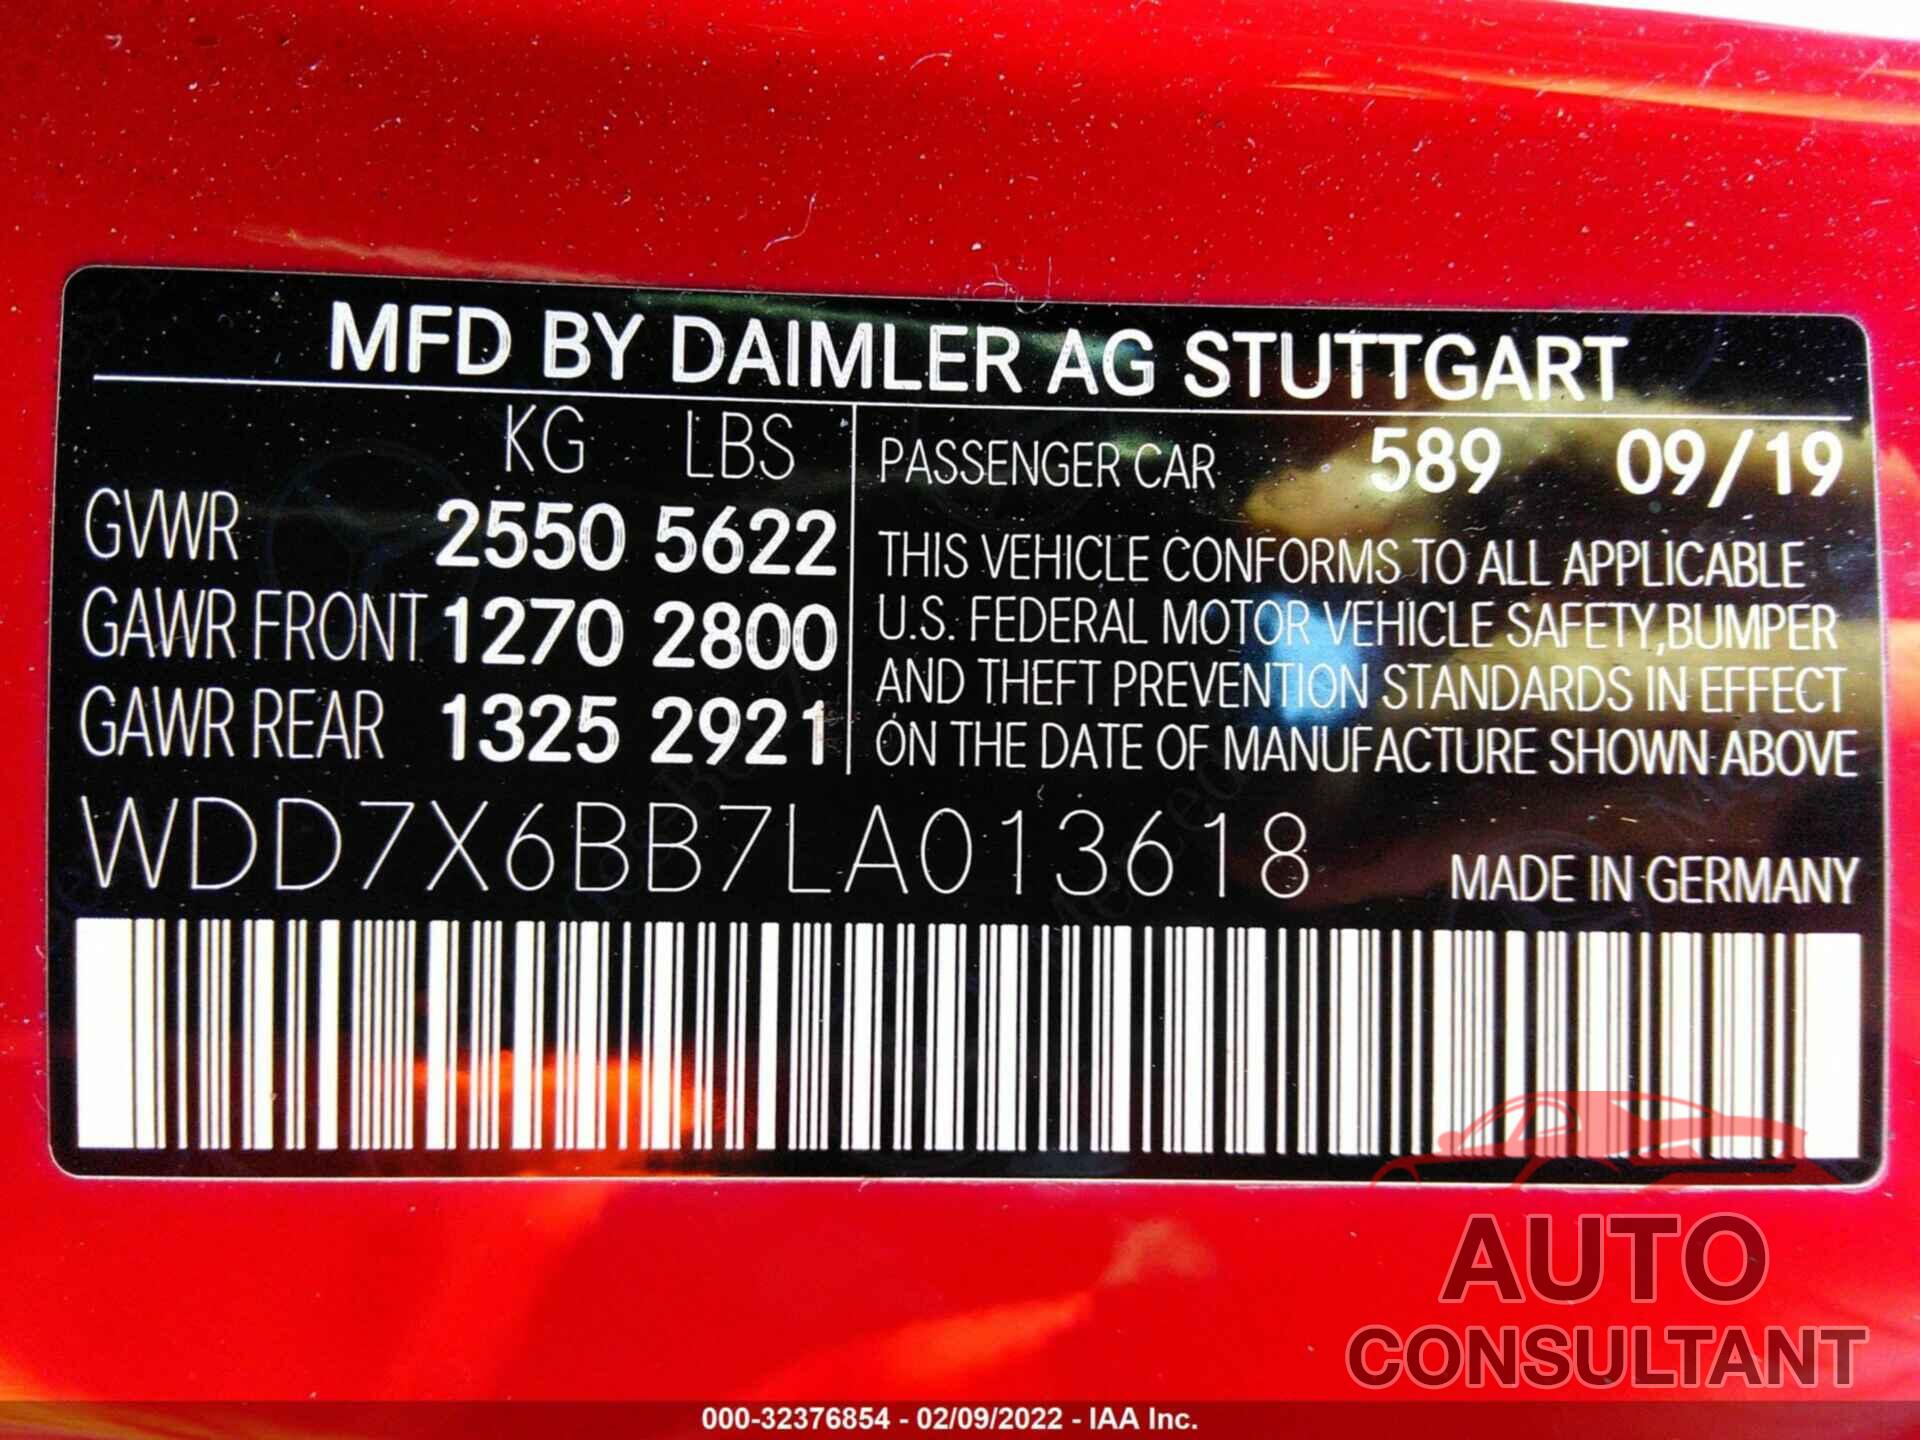 MERCEDES-BENZ AMG GT 2020 - WDD7X6BB7LA013618